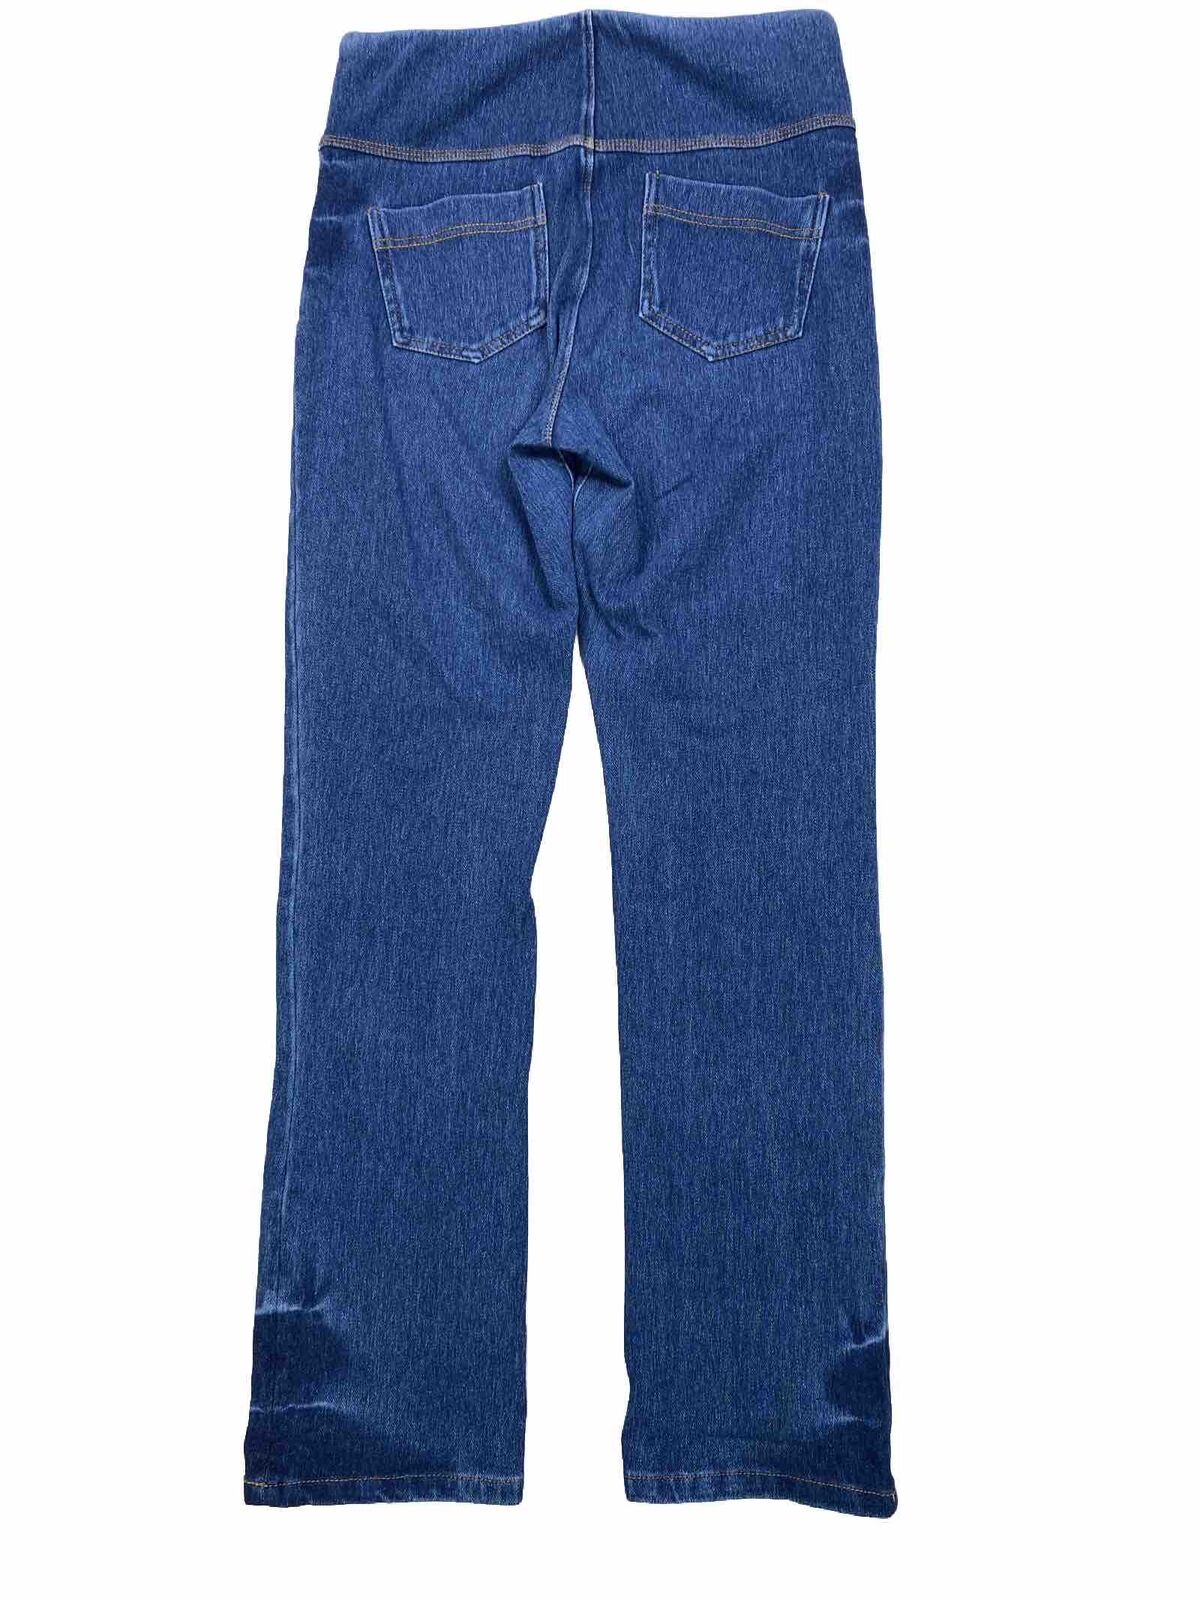 Lysse Women's Dark Wash Jegging Jeans - M